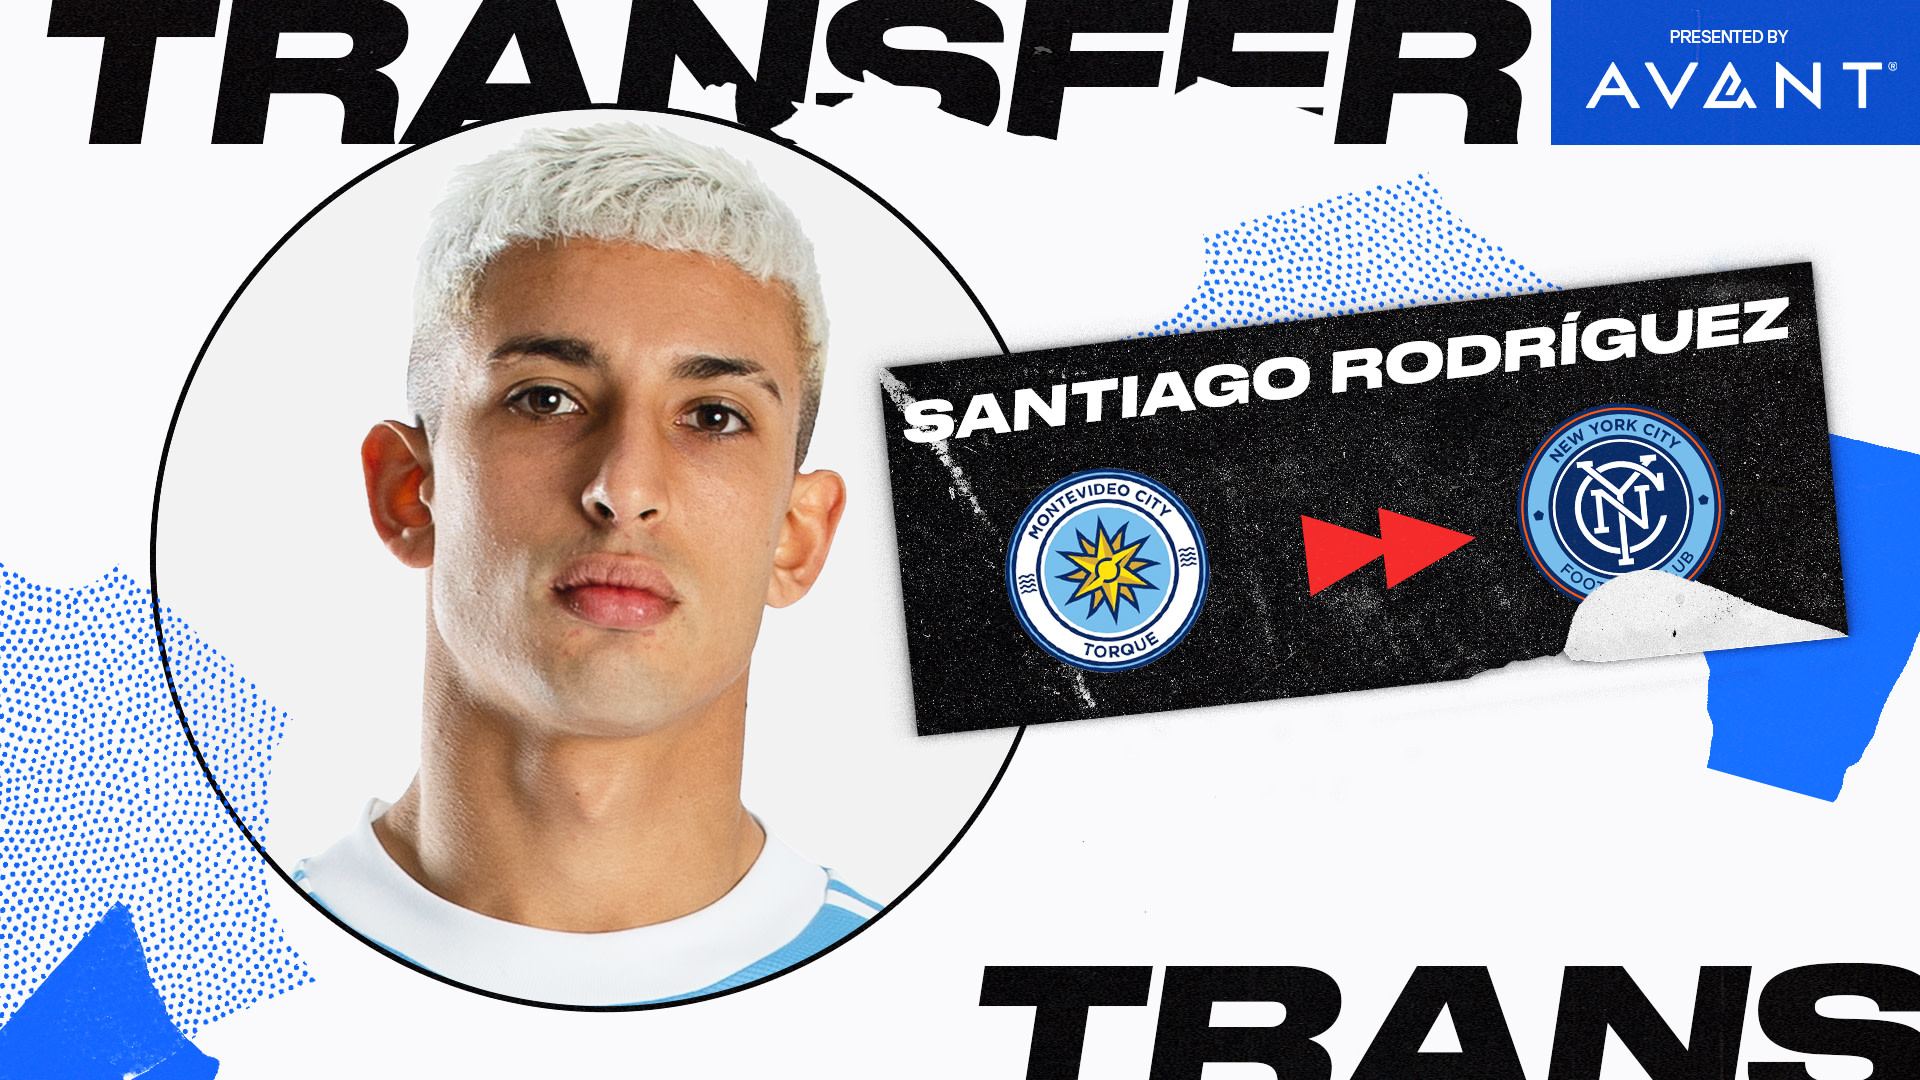 Santiago Rodríguez returns to NYCFC as Designated Player